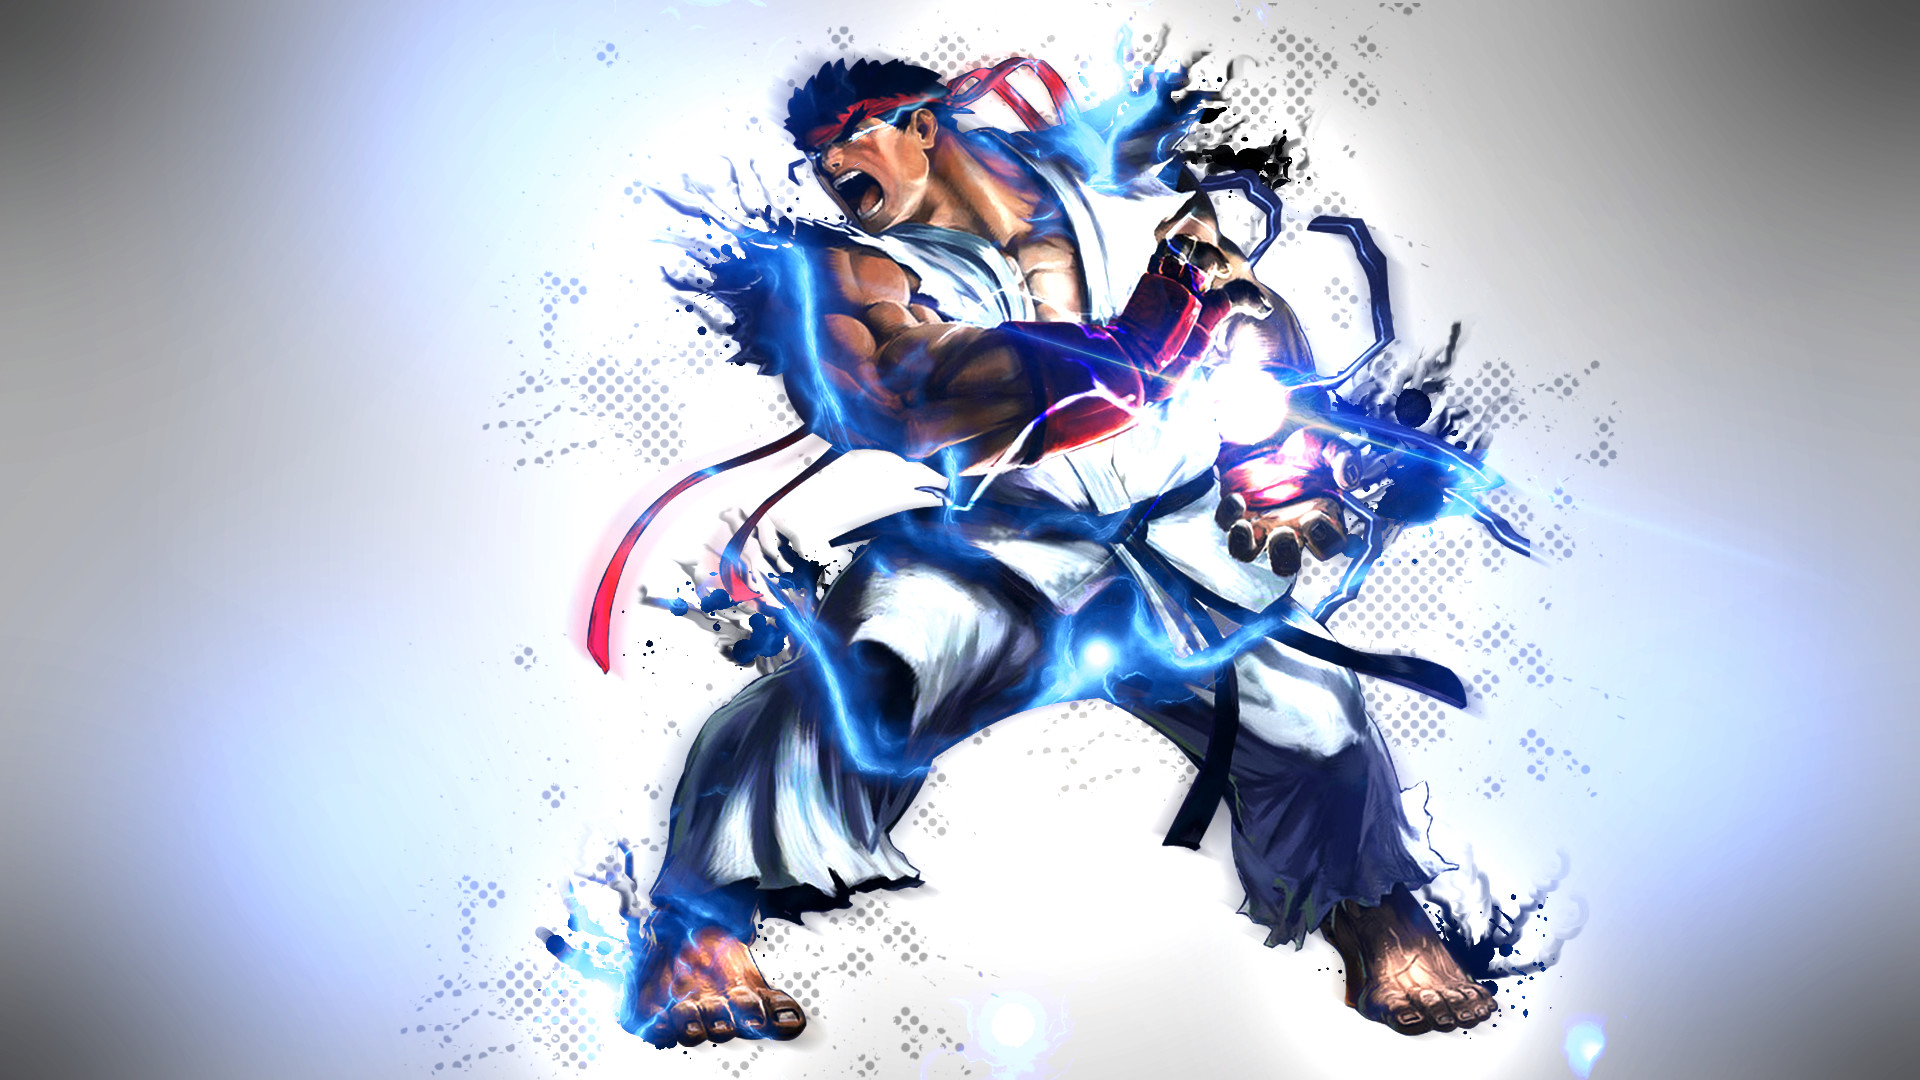 ryu street fighter wallpaper,graphic design,illustration,anime,fictional character,art